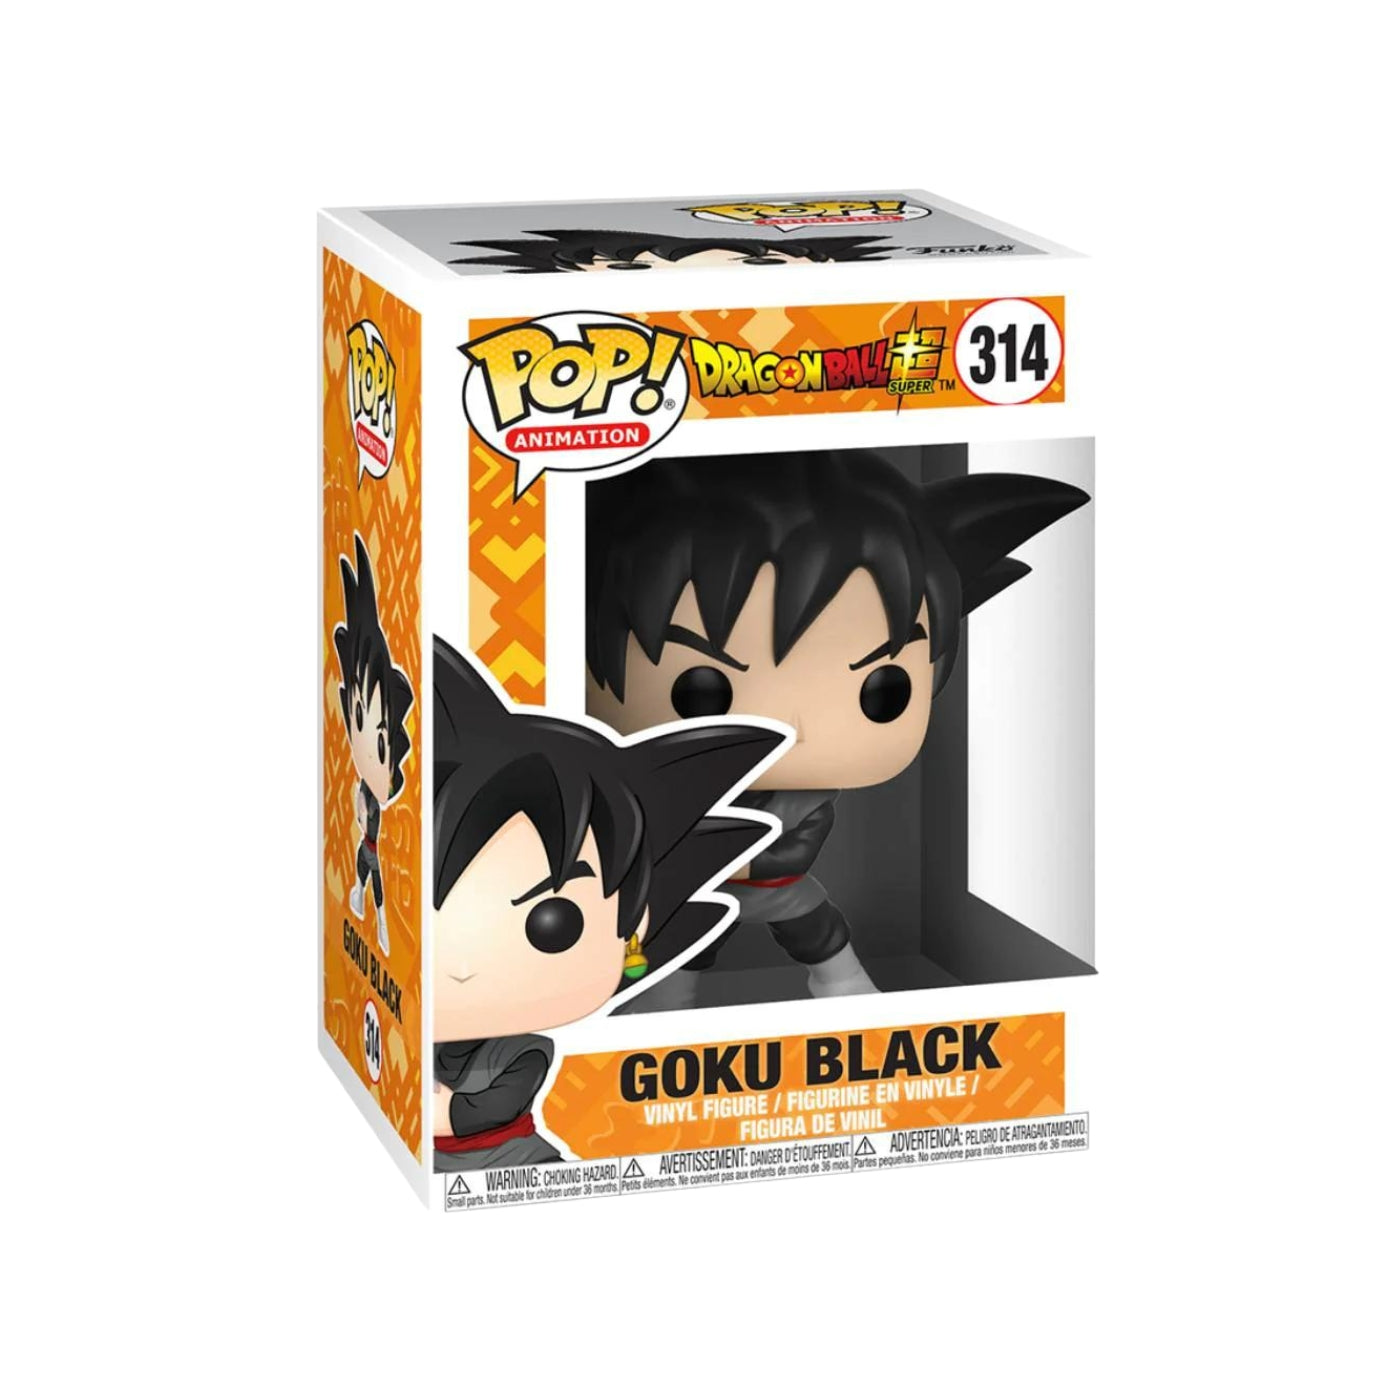 Funko Pop animation: Goku Black (314)